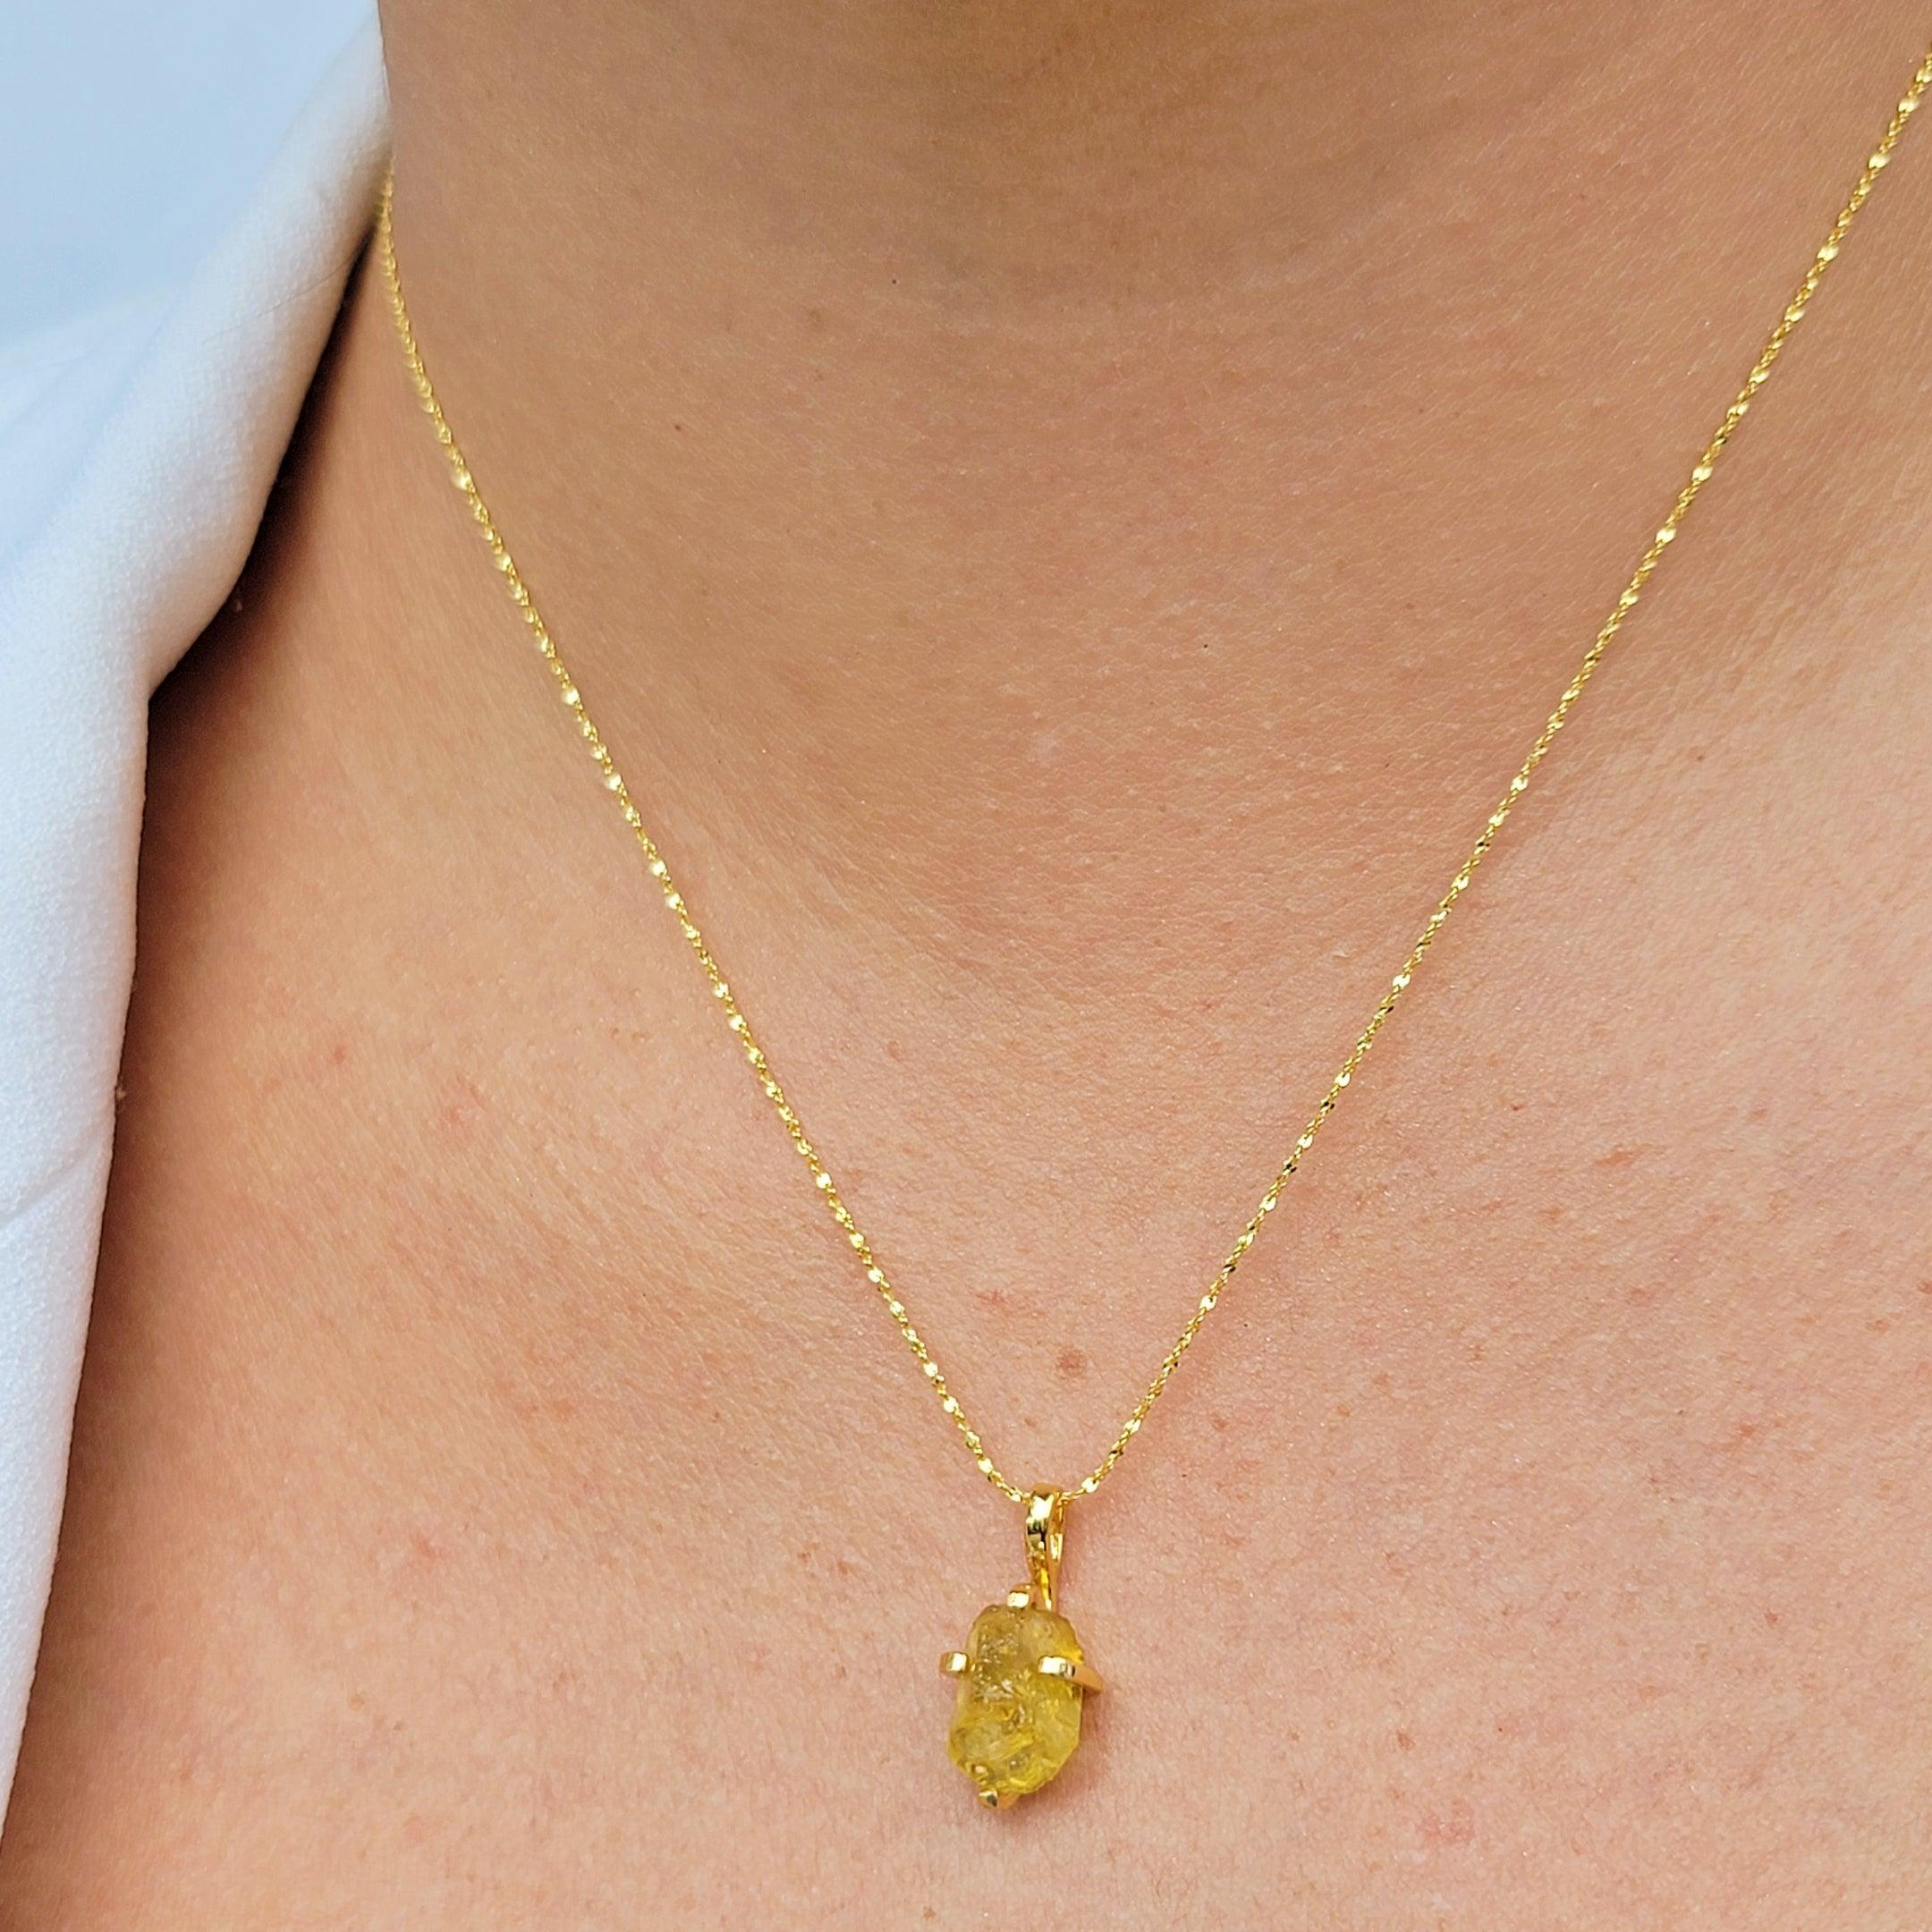 Buy Niscka Yellow Sapphire Stone Pendant Necklace Online